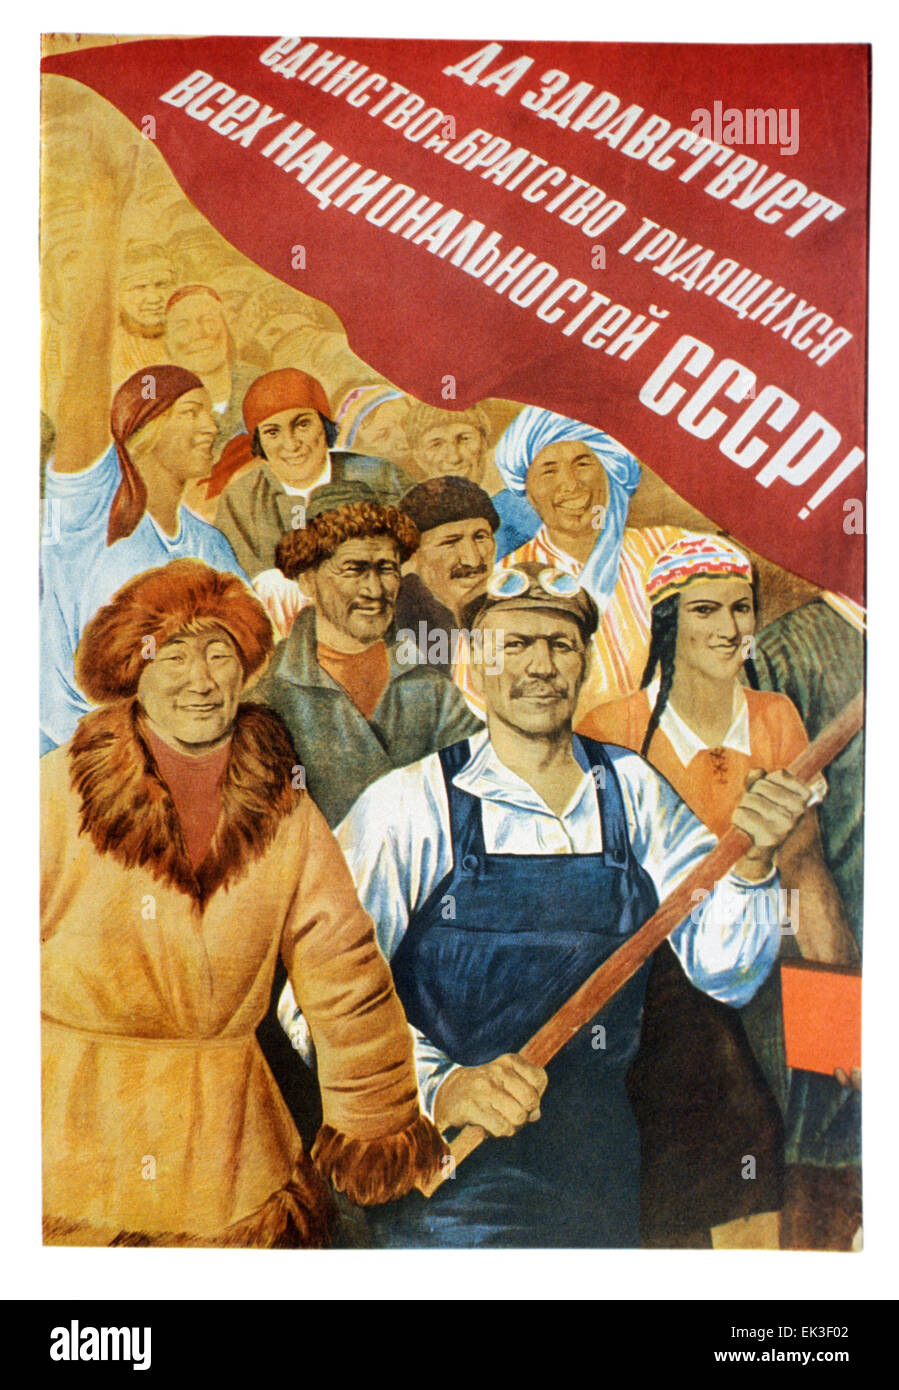 ussr-one-of-the-soviet-propaganda-posters-with-a-slogan-long-live-EK3F02.jpg